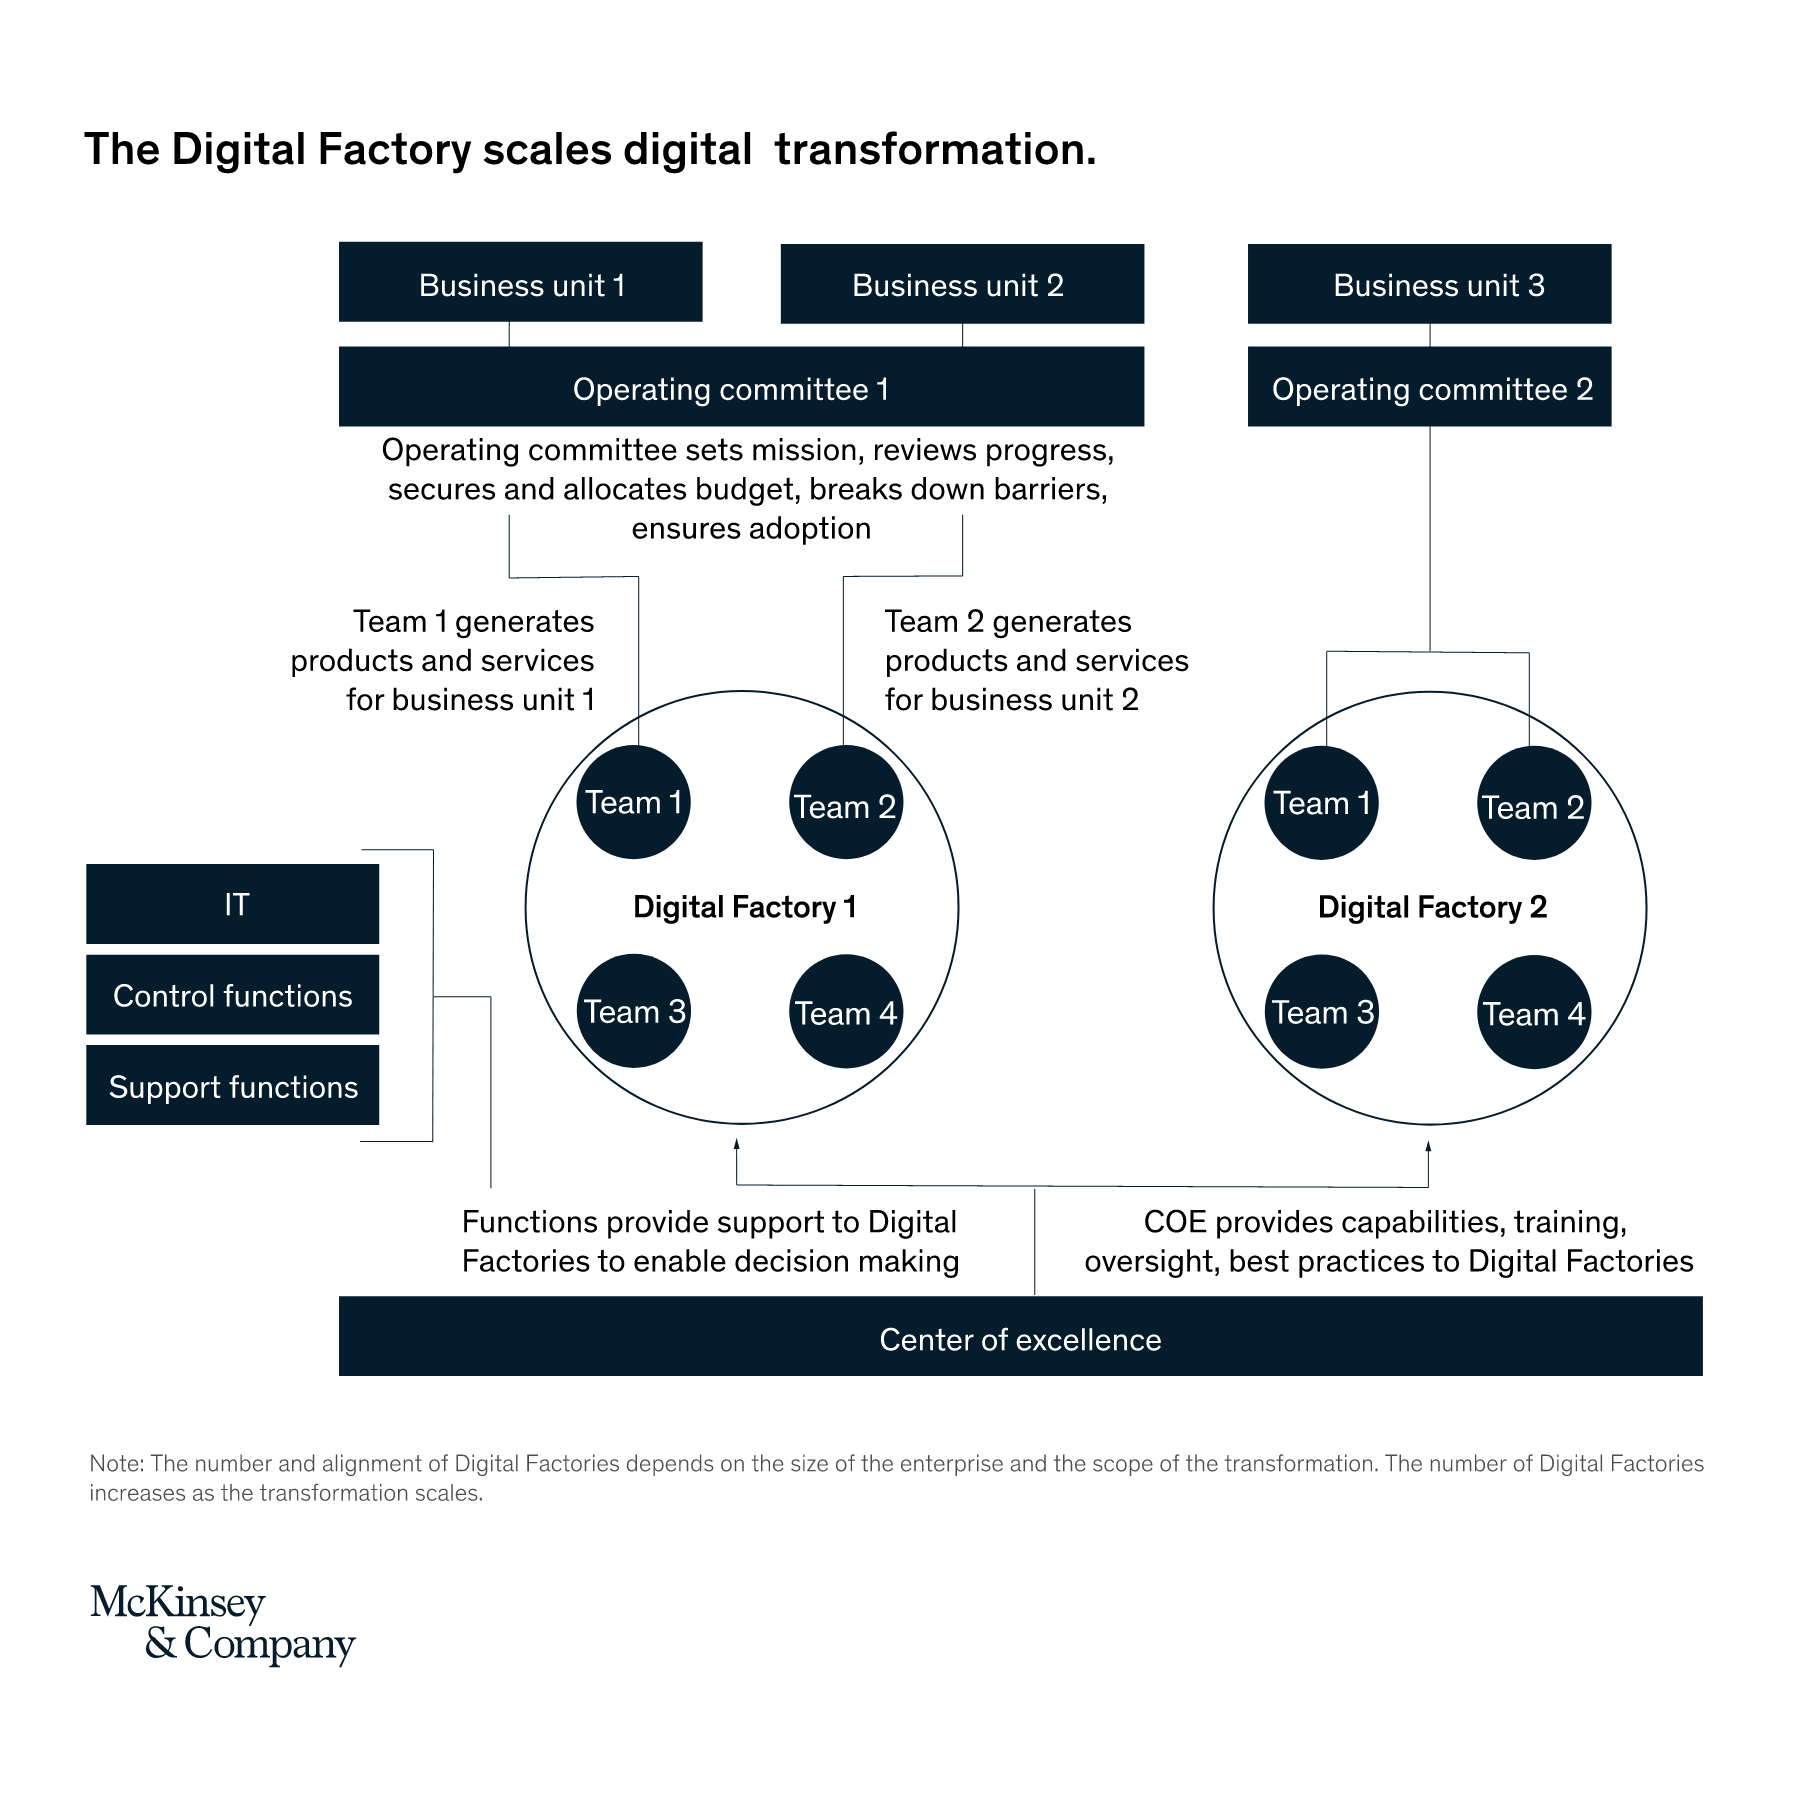 Exhibit 1 - The DigitalFactory scales digital transformation